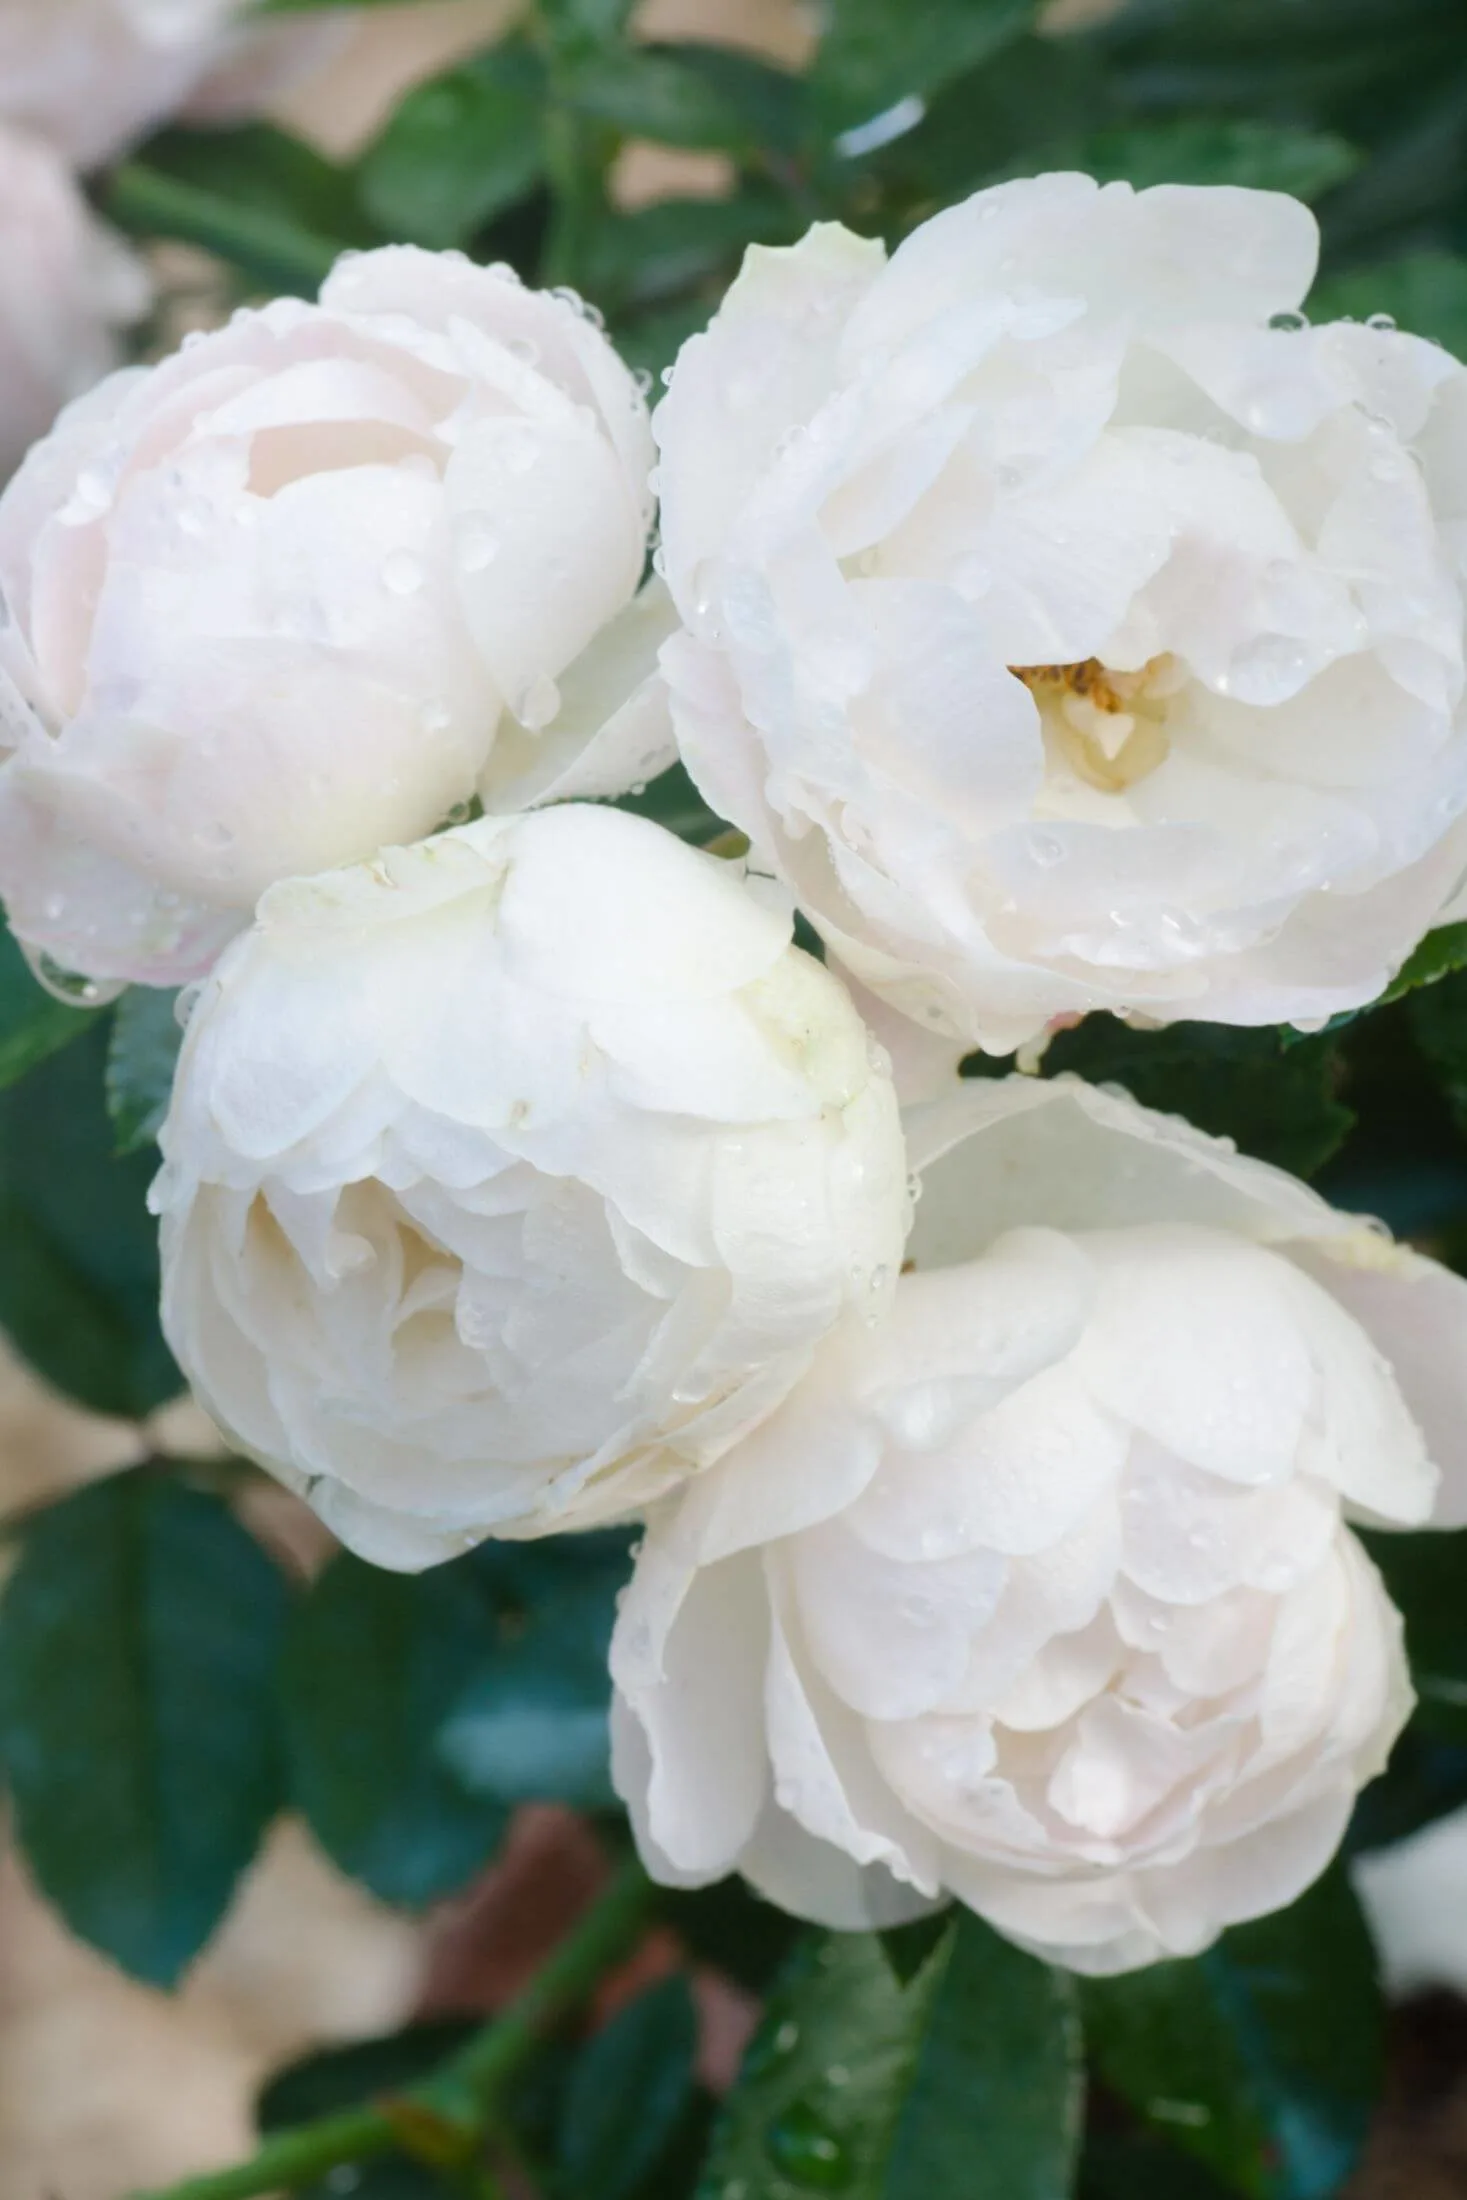 Water droplets on white floribunda roses. 